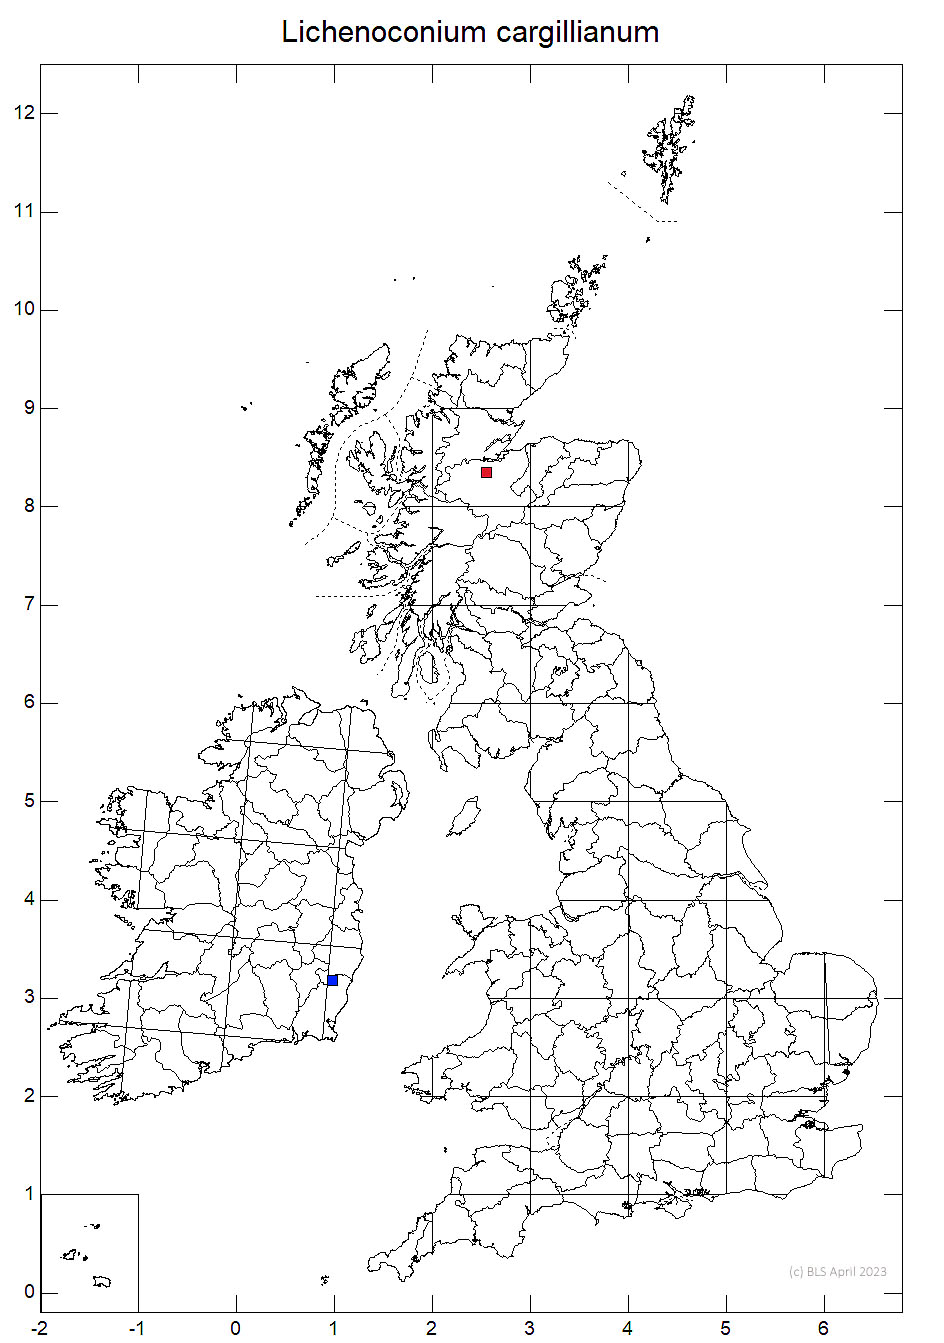 Lichenoconium cargillianum 10km sq distribution map